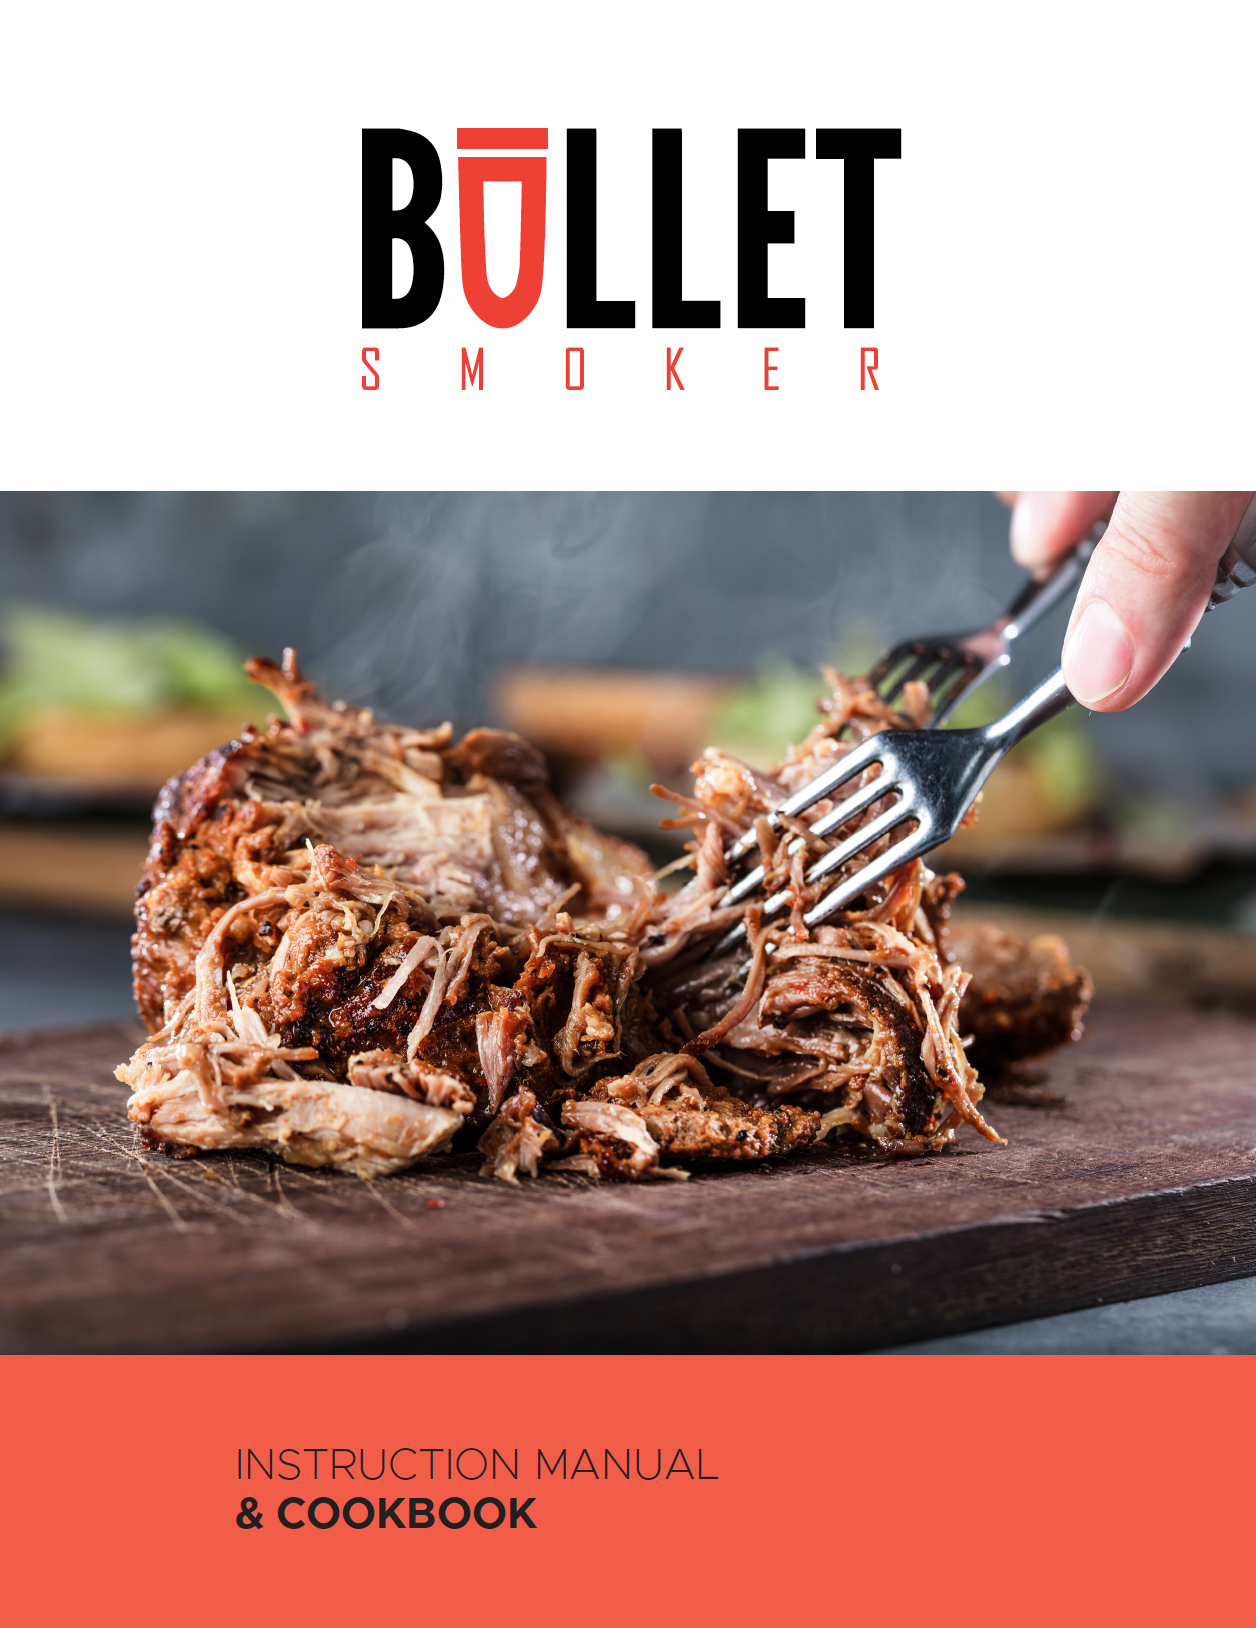 The Bullet Smoker Owner's Manual & Cookbook (Digital Copy PDF)